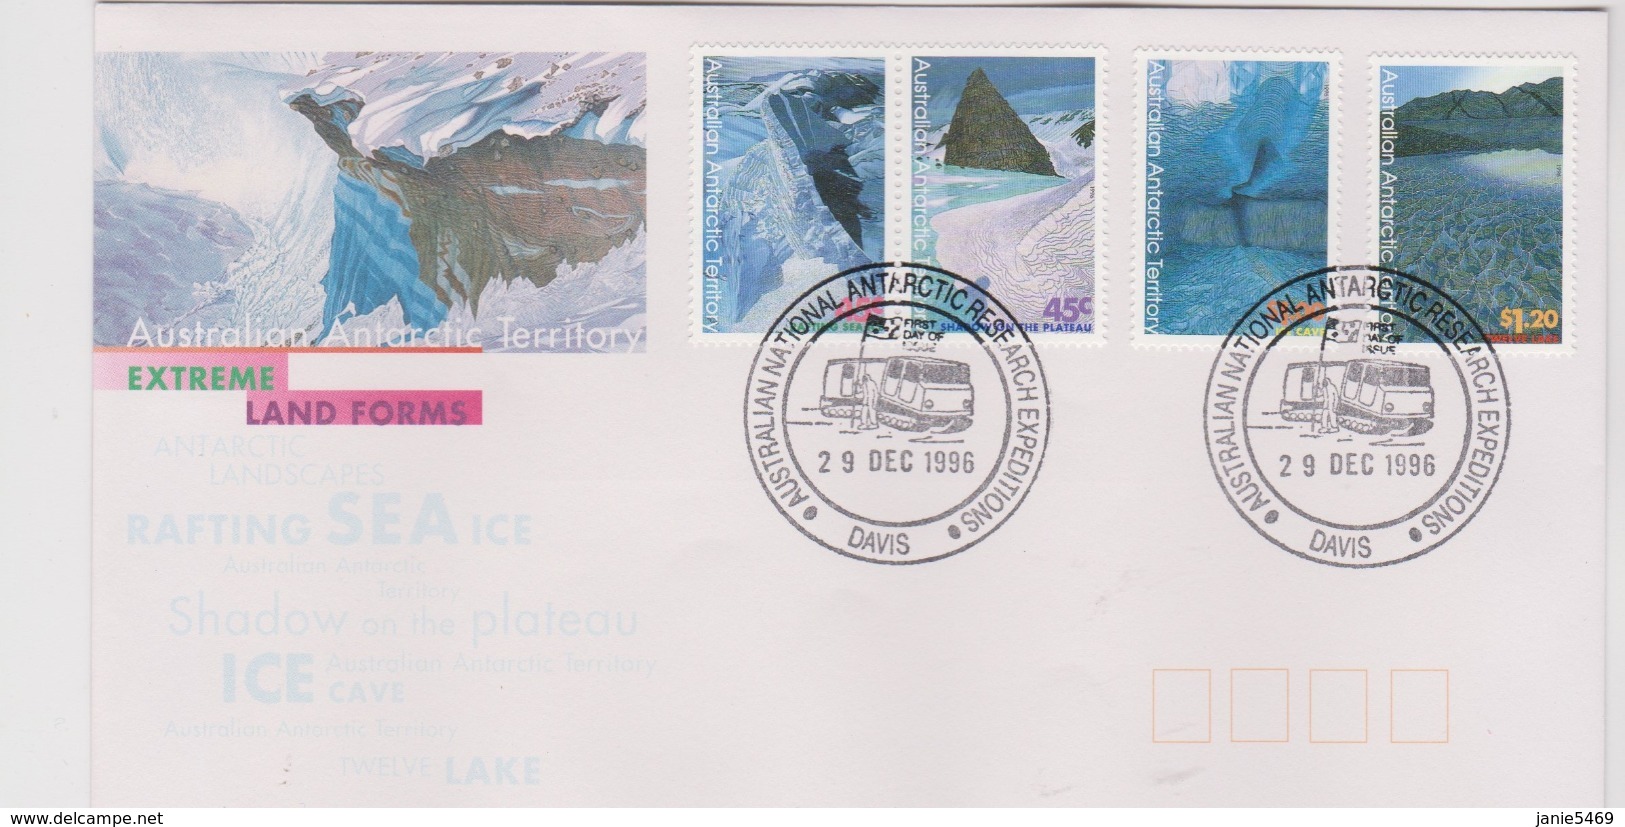 Australian Antarctic Territory 1996 Extreme Landforms, Macquarie Base Postmark,FDC - FDC